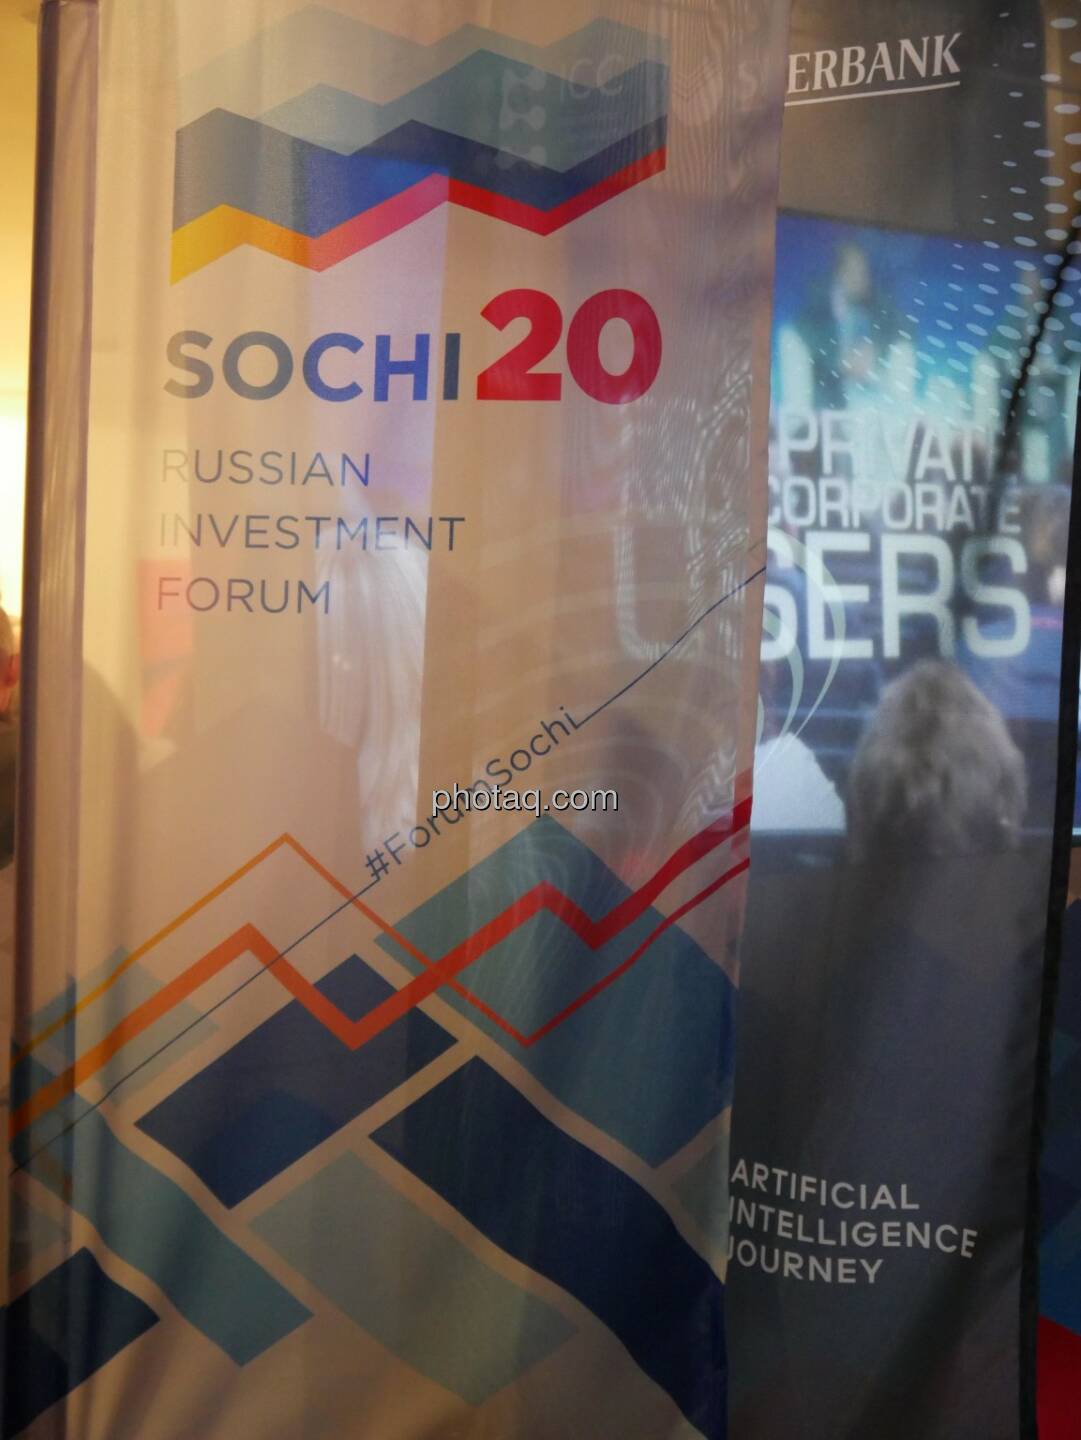 Sochi 20 Russian Investment Forum